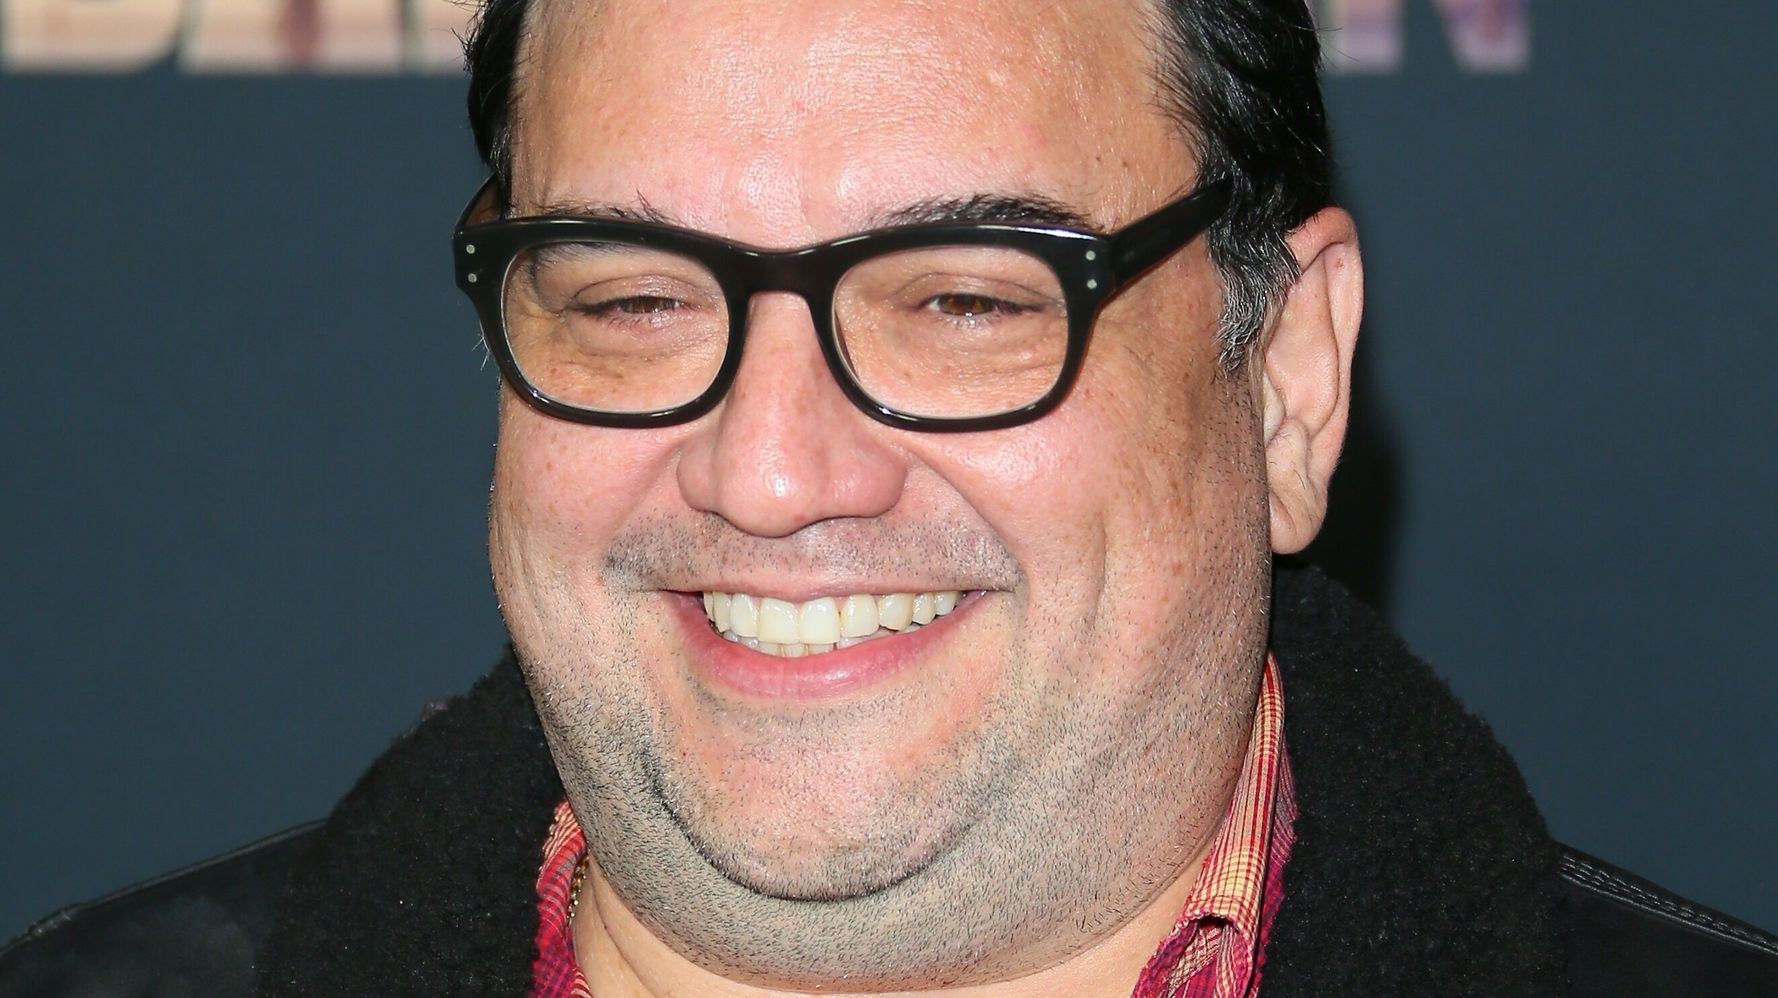 Former 'SNL' Cast Member Horatio Sanz Accused Of Sexual Assault